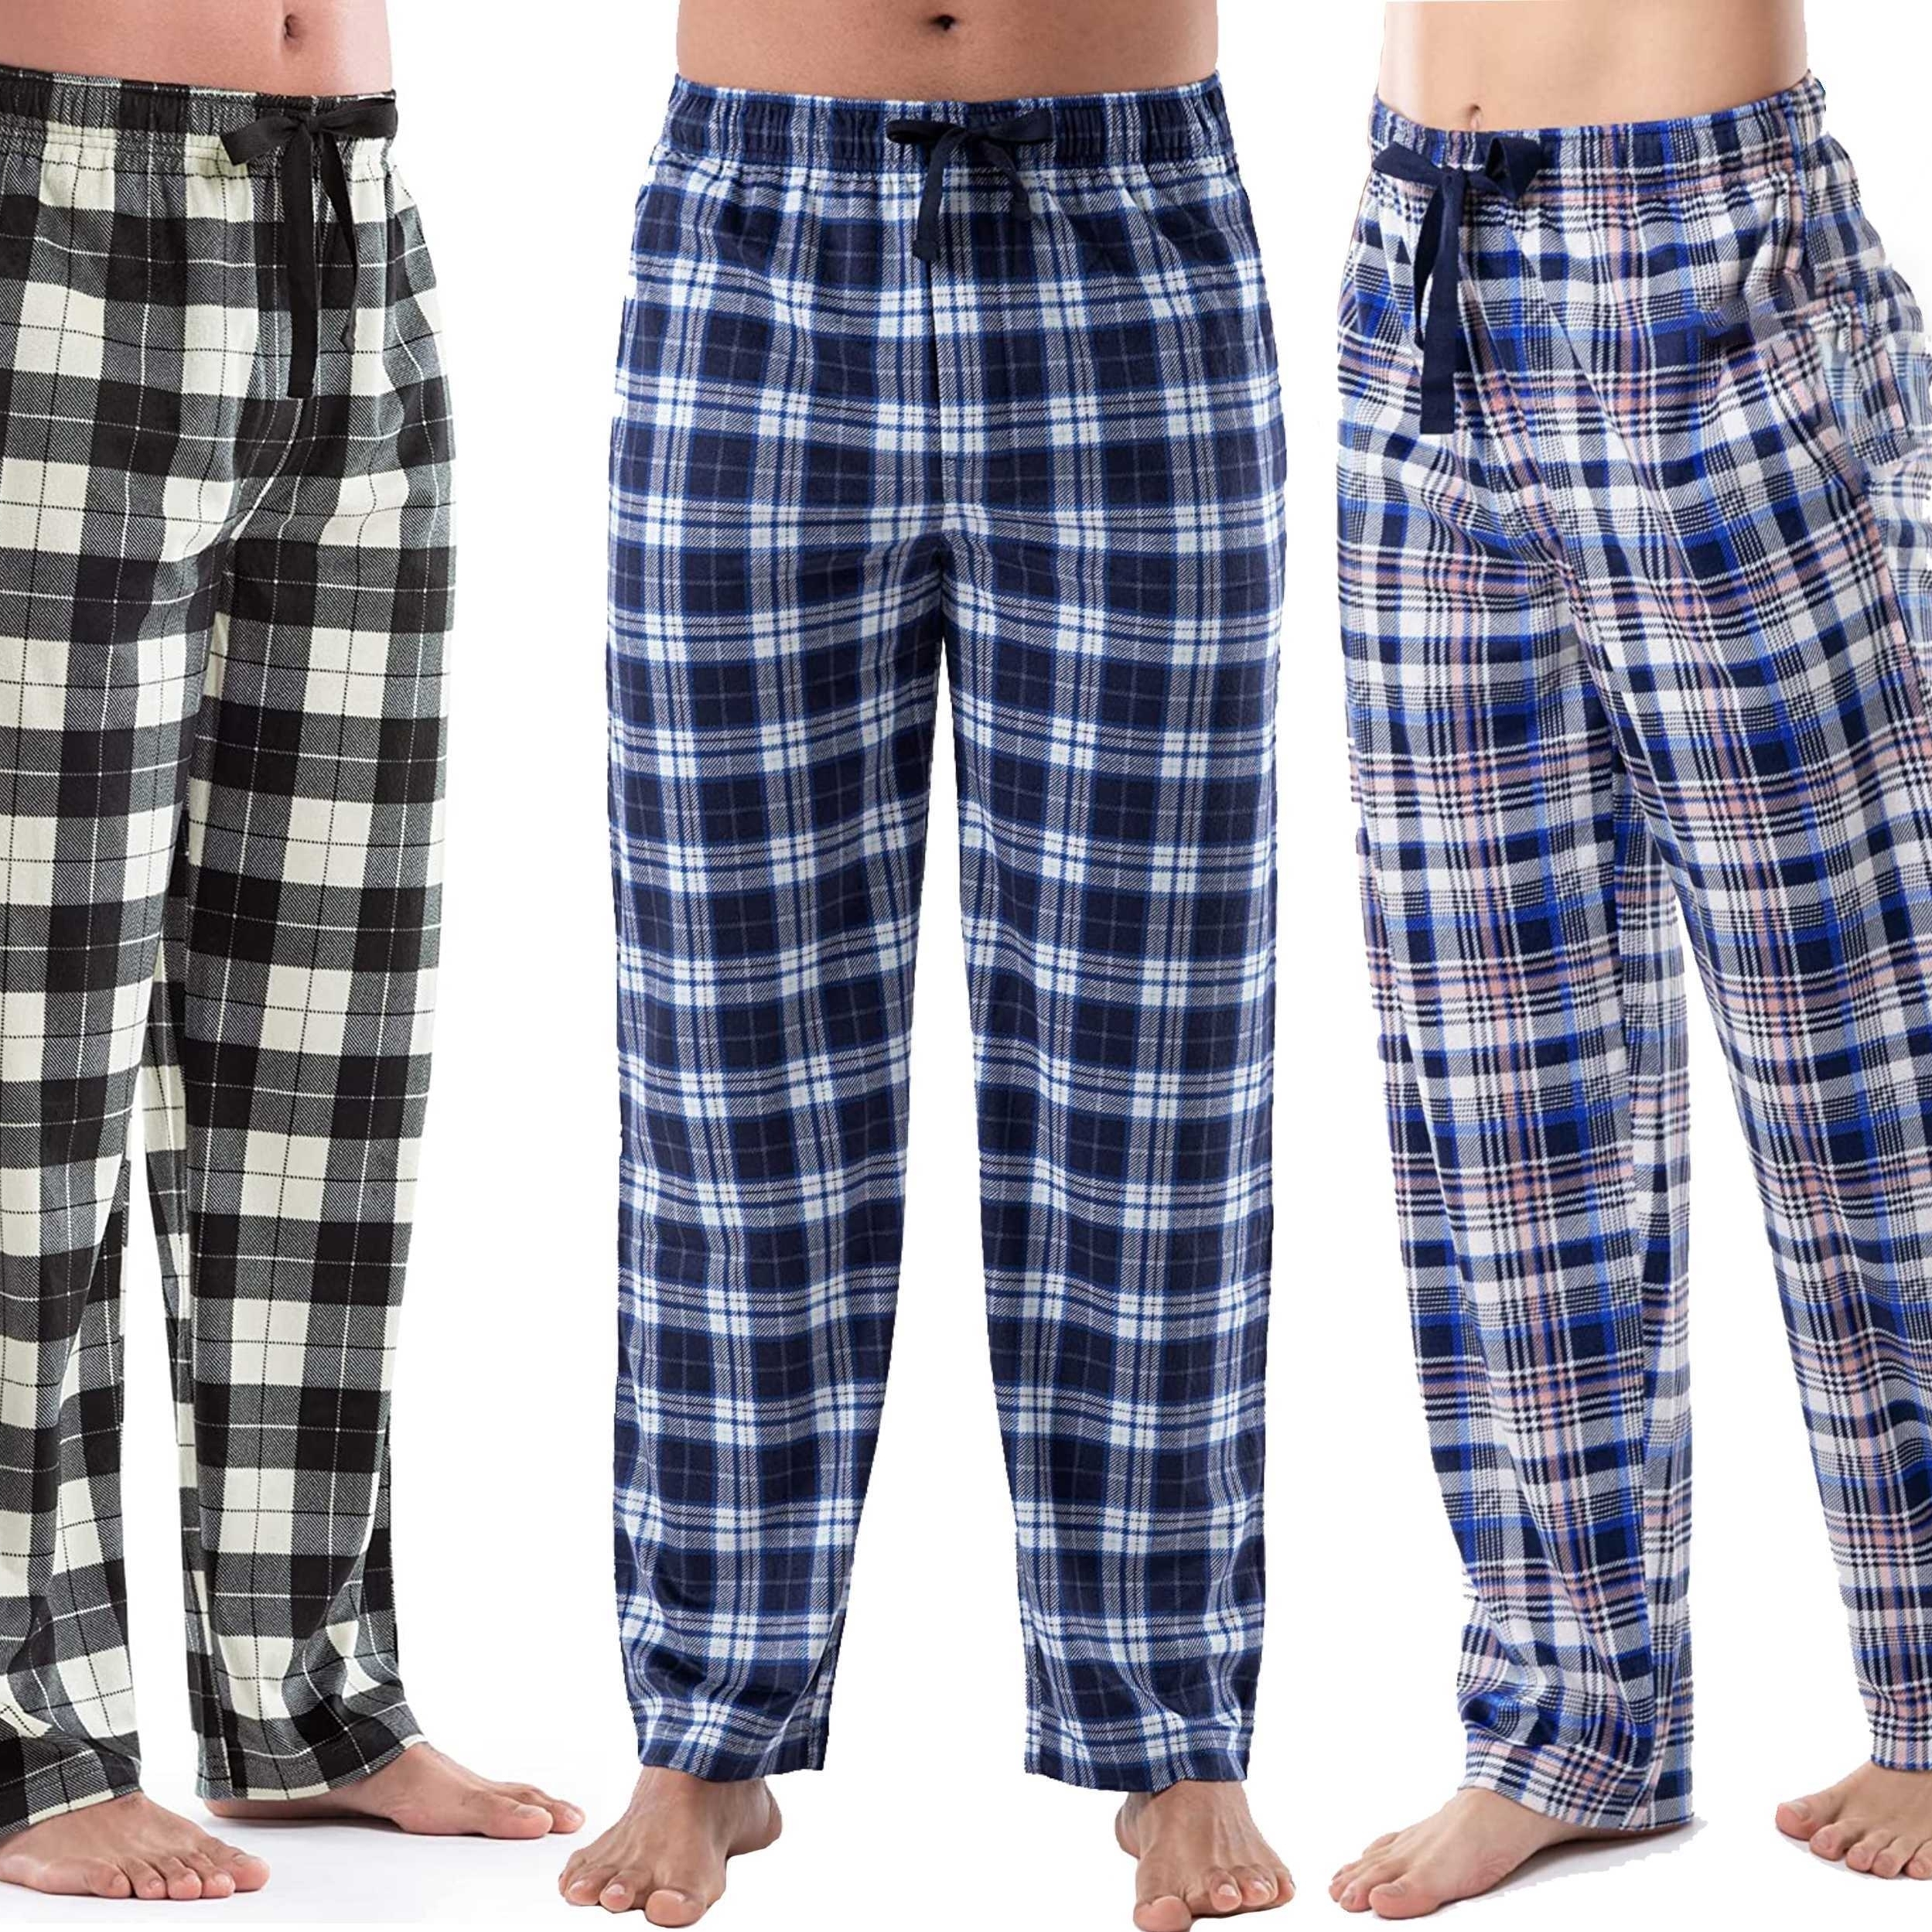 3 Pack: Men's Soft Micro Fleece Plaid Print Pajama Lounge Pants - Small